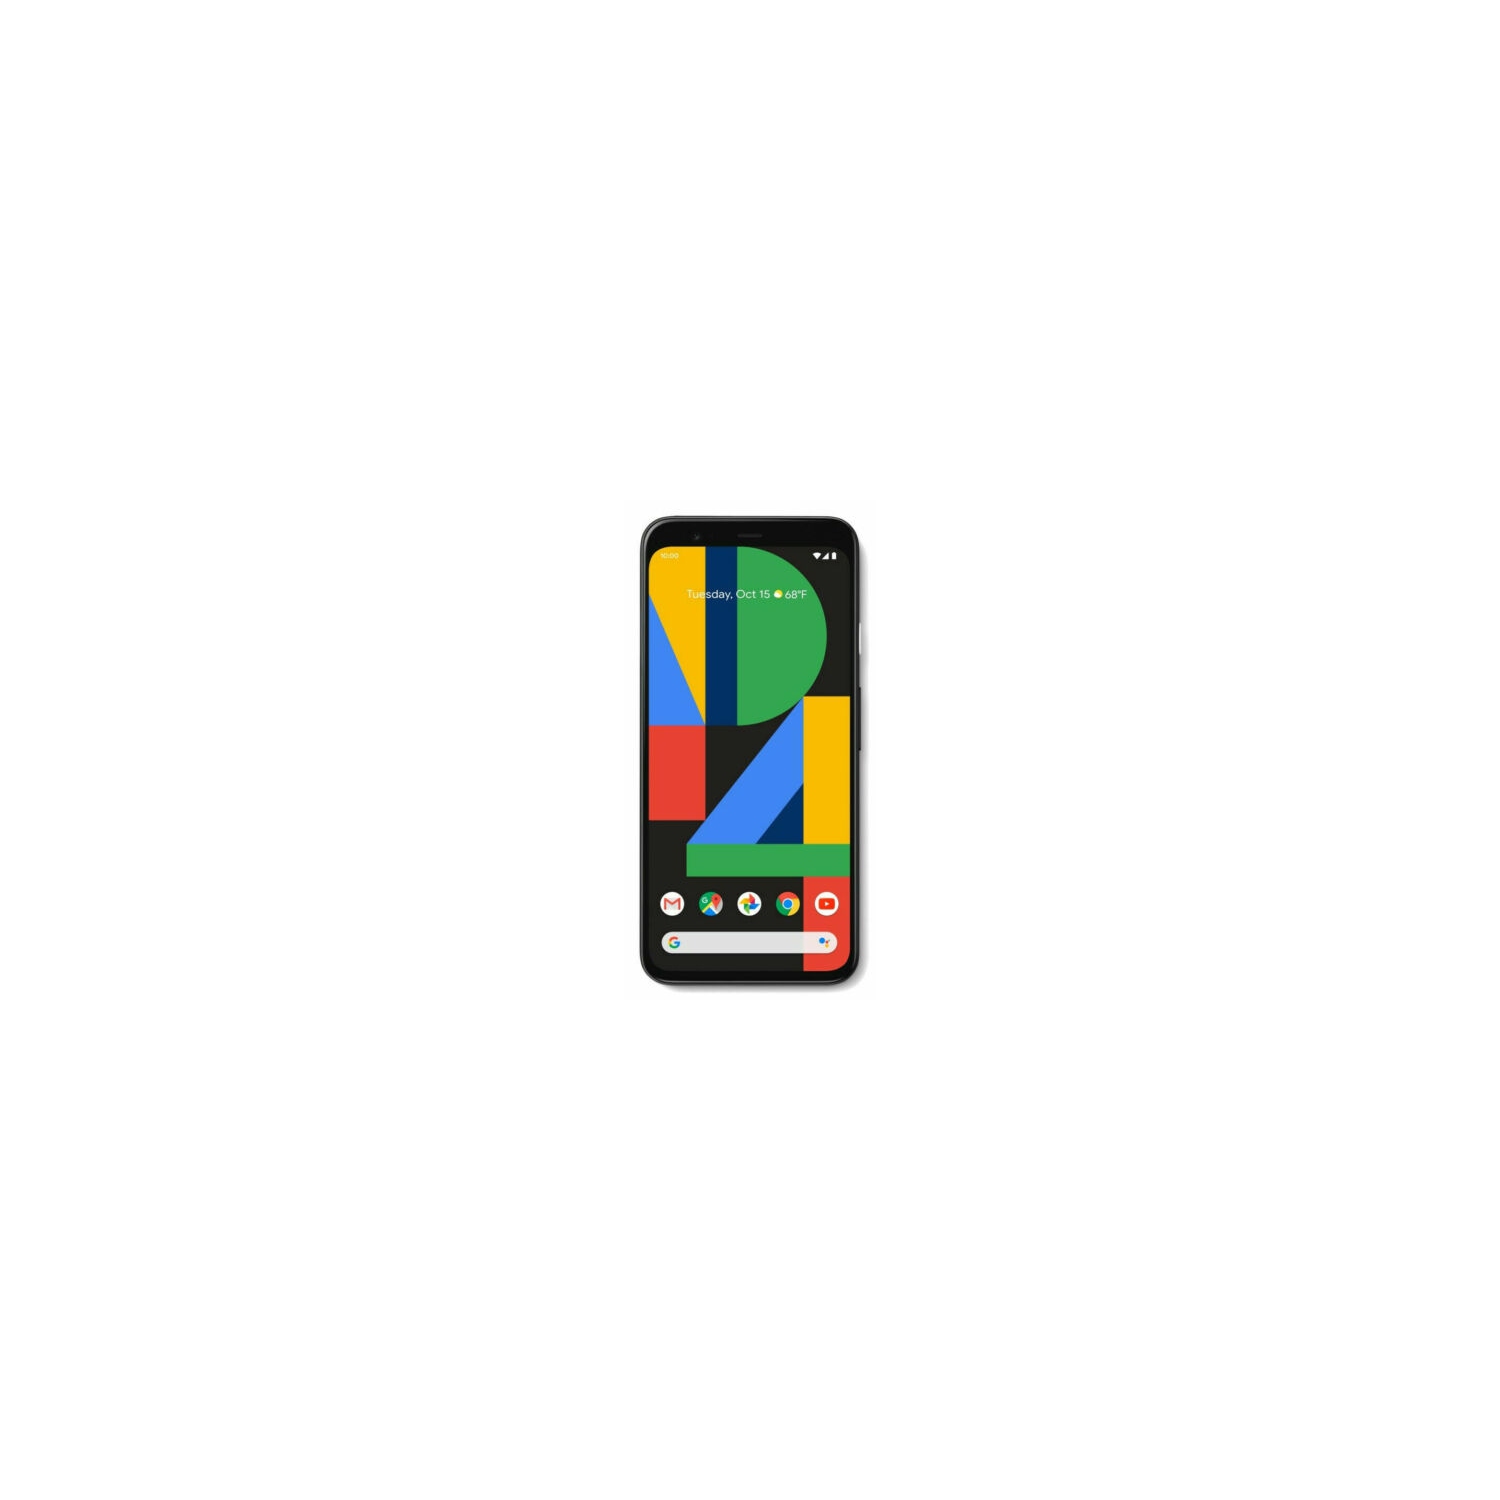 Google Pixel 4 128GB Smartphone - Just Black - Unlocked - New 